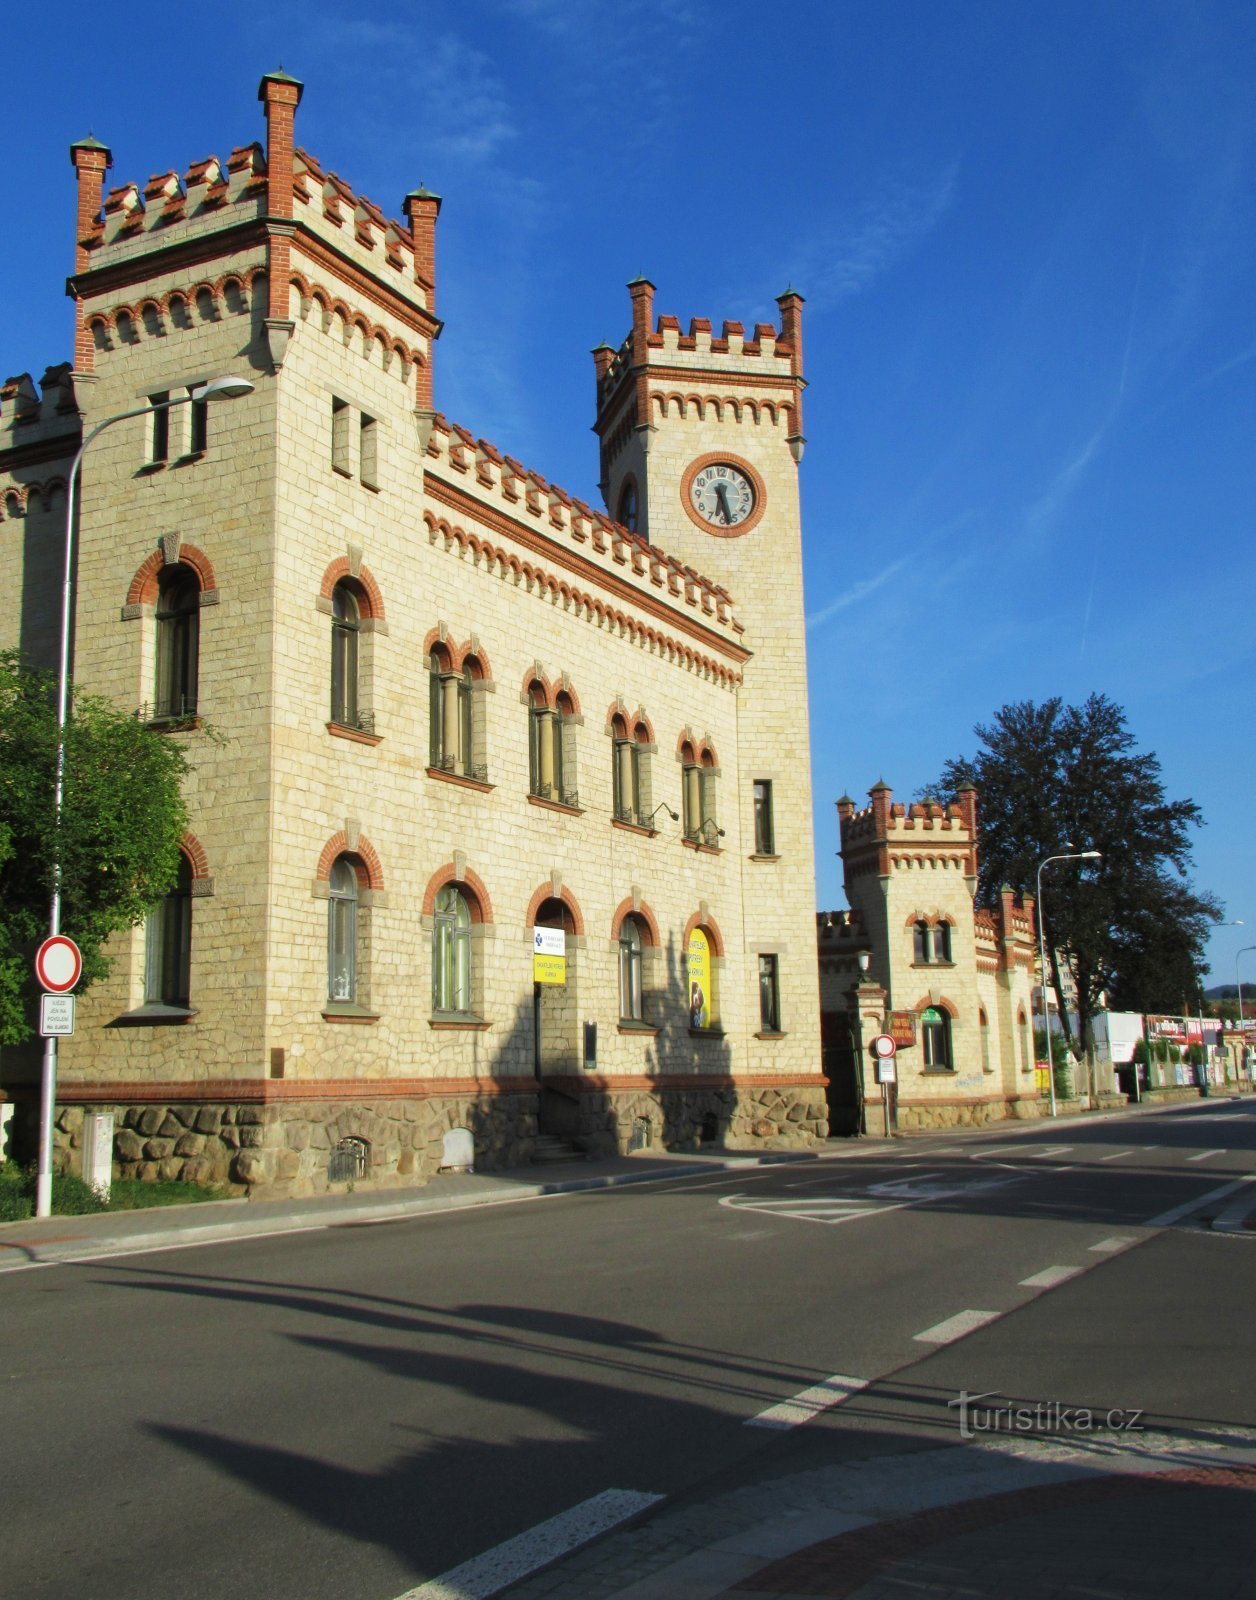 Ježek-virksomhedens historiske bygning i Blansko